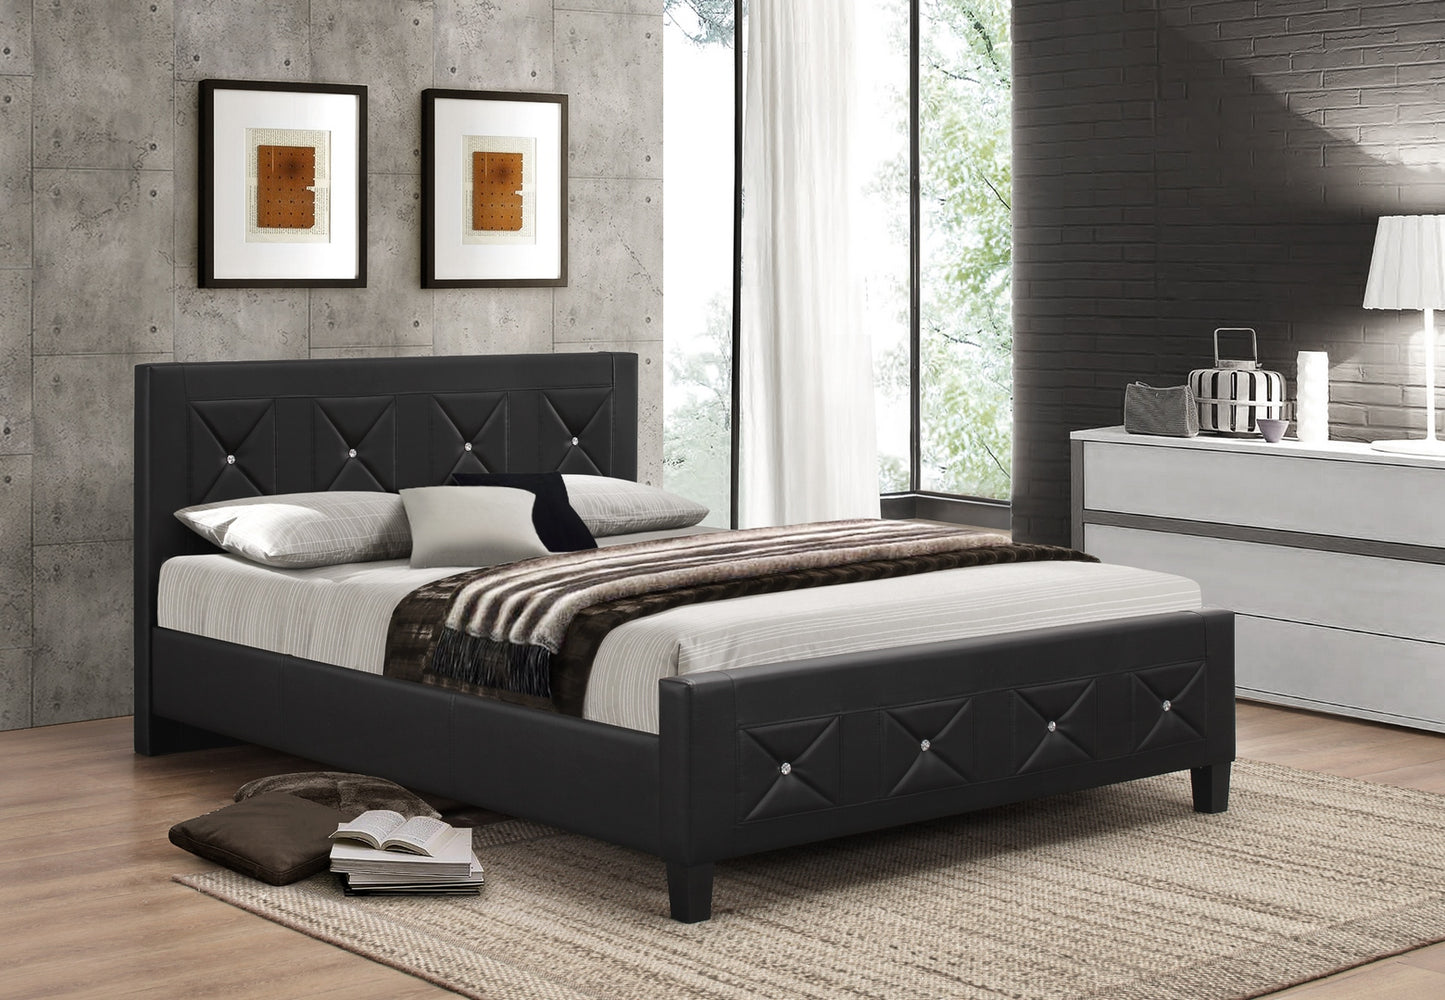 177 Black with Jewels Upholstered Bed - Furniture Depot